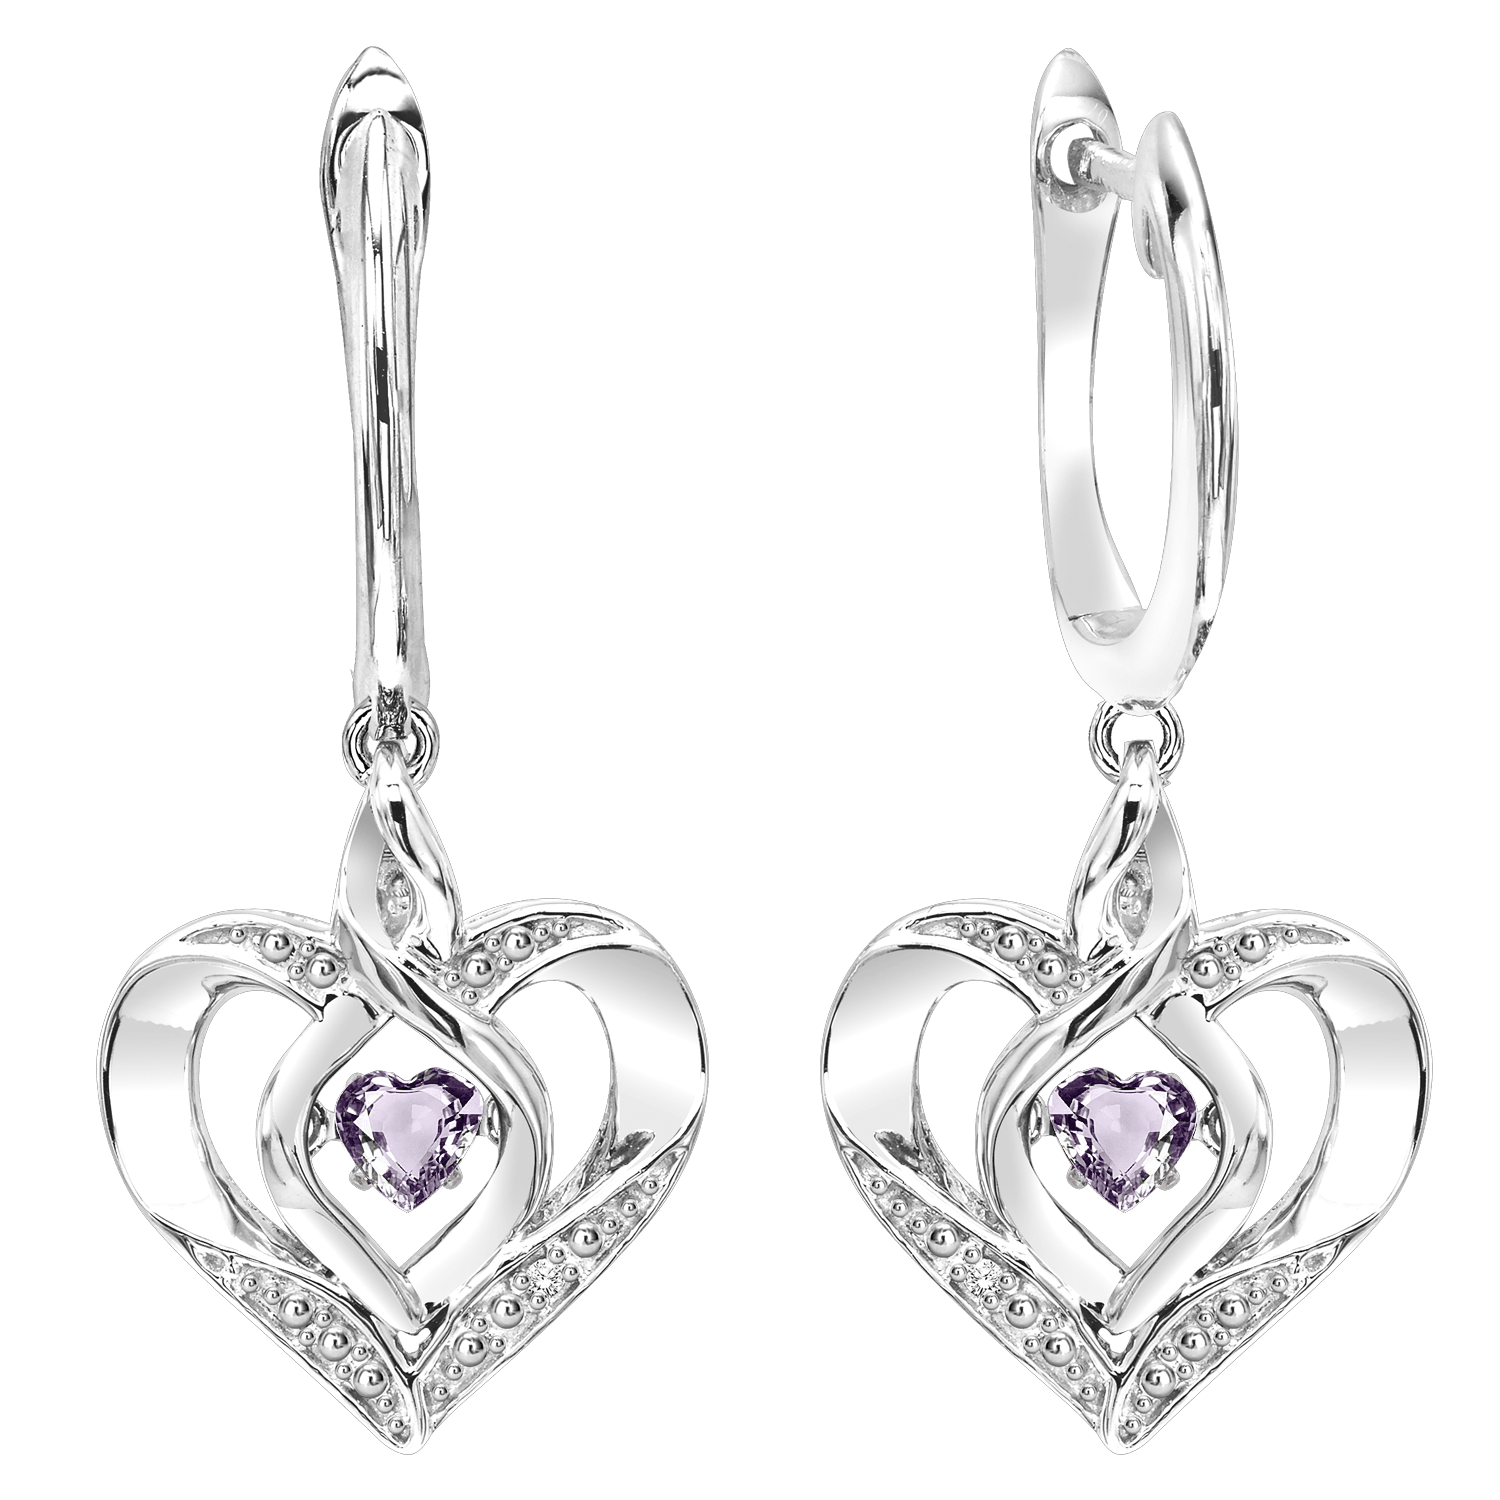 BW James Jewelers Earrings 16 Page Christmas Catalog Offer SS Diamond ROL-Birthst Heart Basics Earring